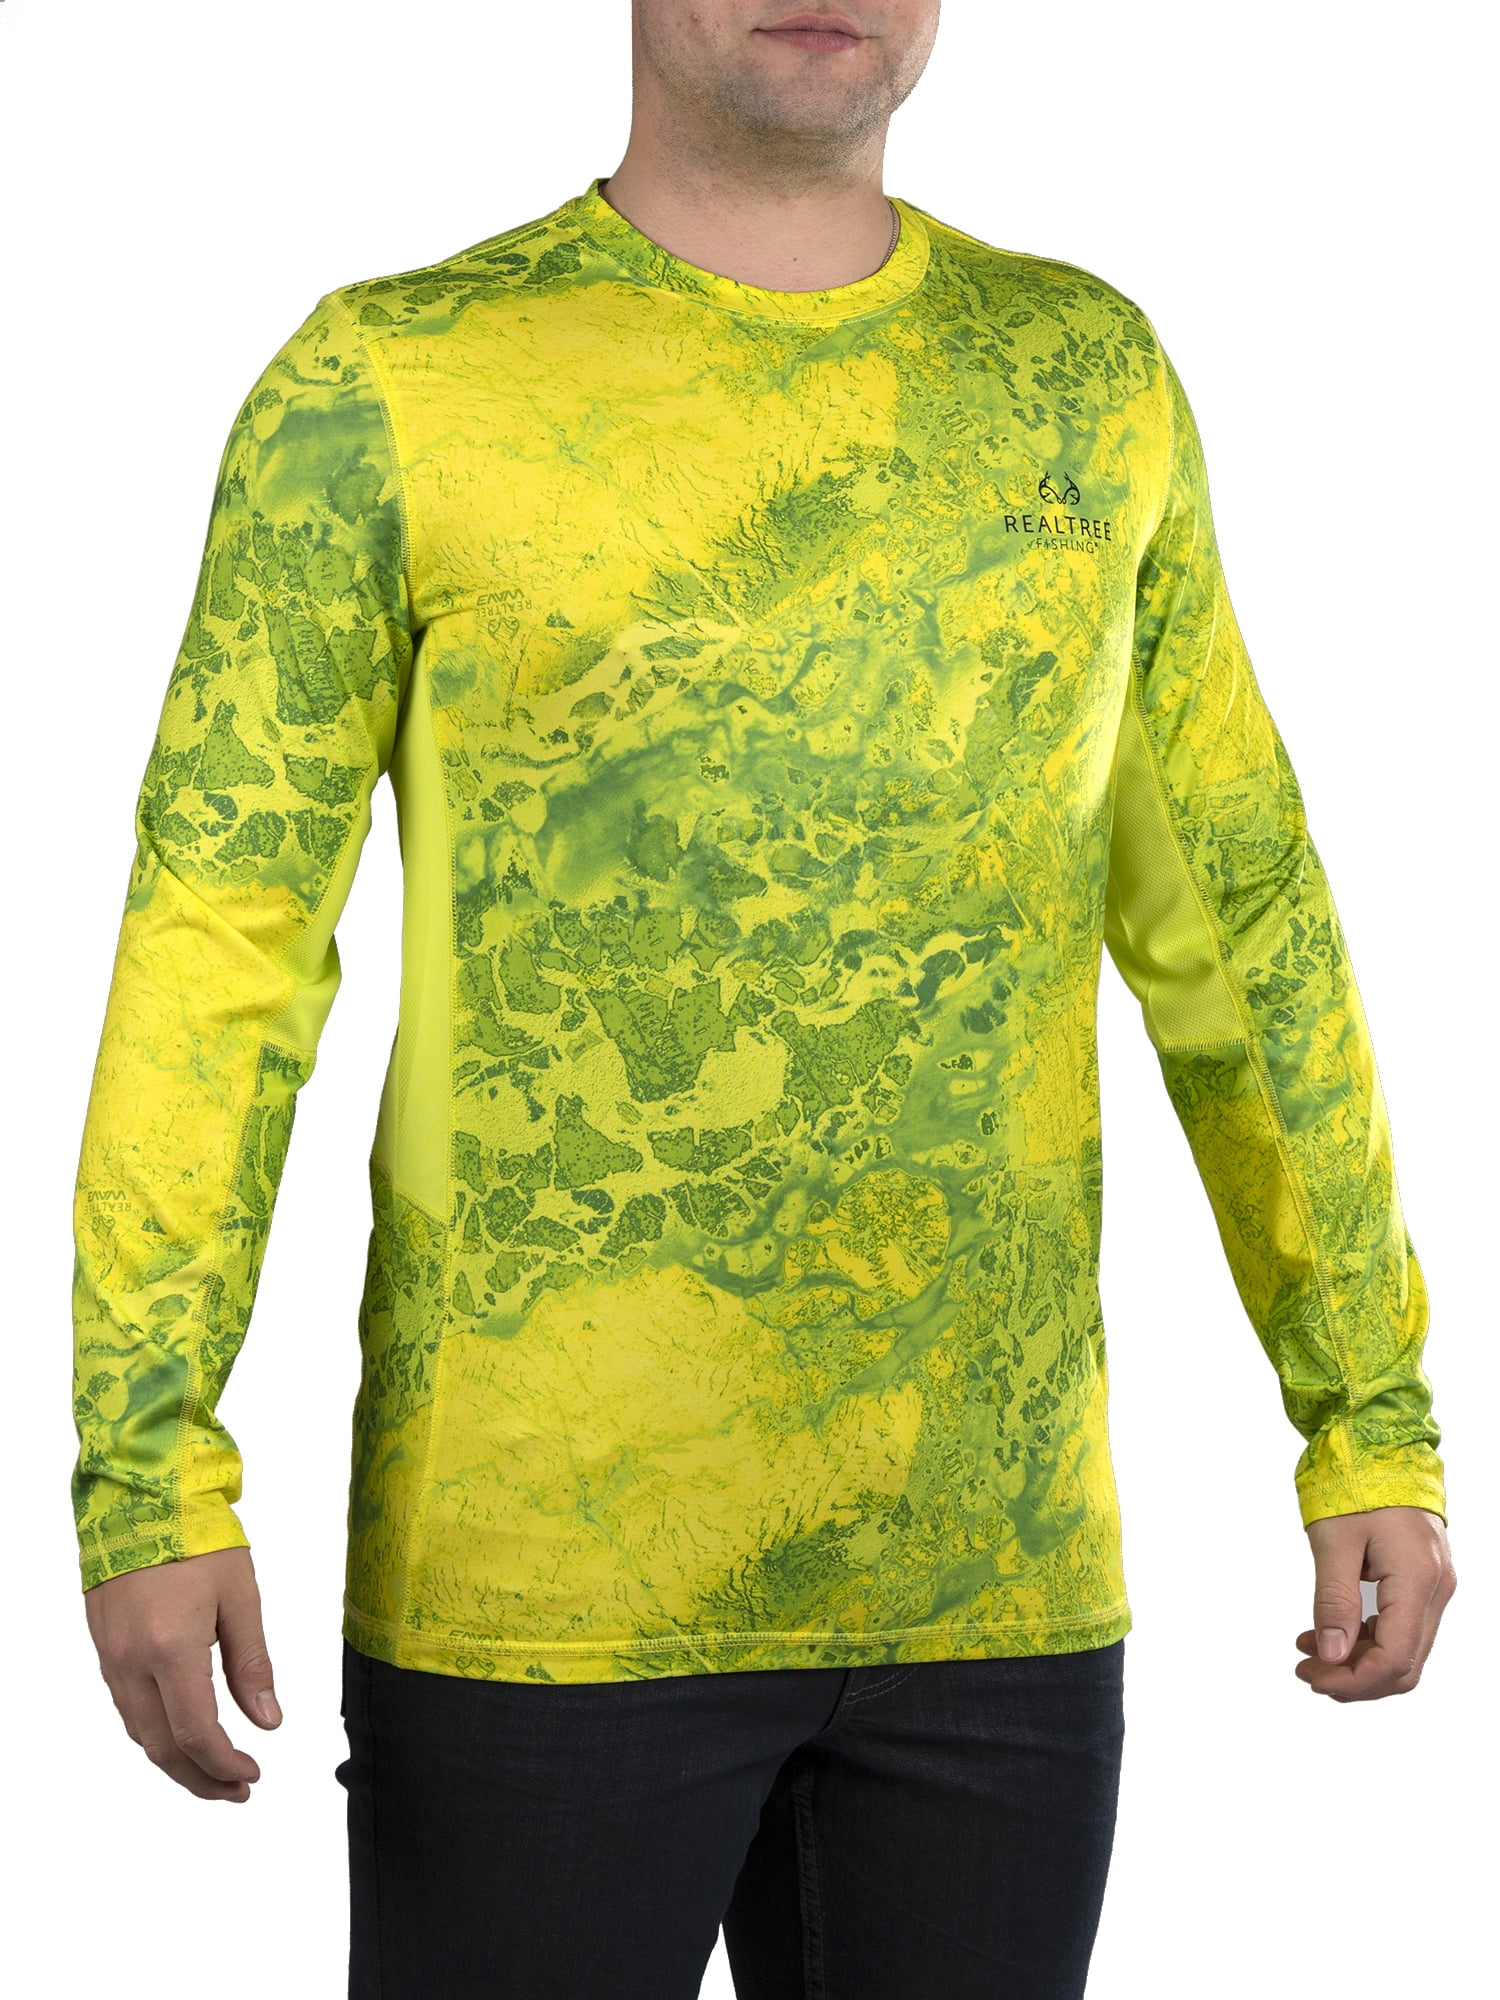 Realtree Wav3 Neon Citrus Camo Long Sleeve Performance Fishing Shirt for  Men 